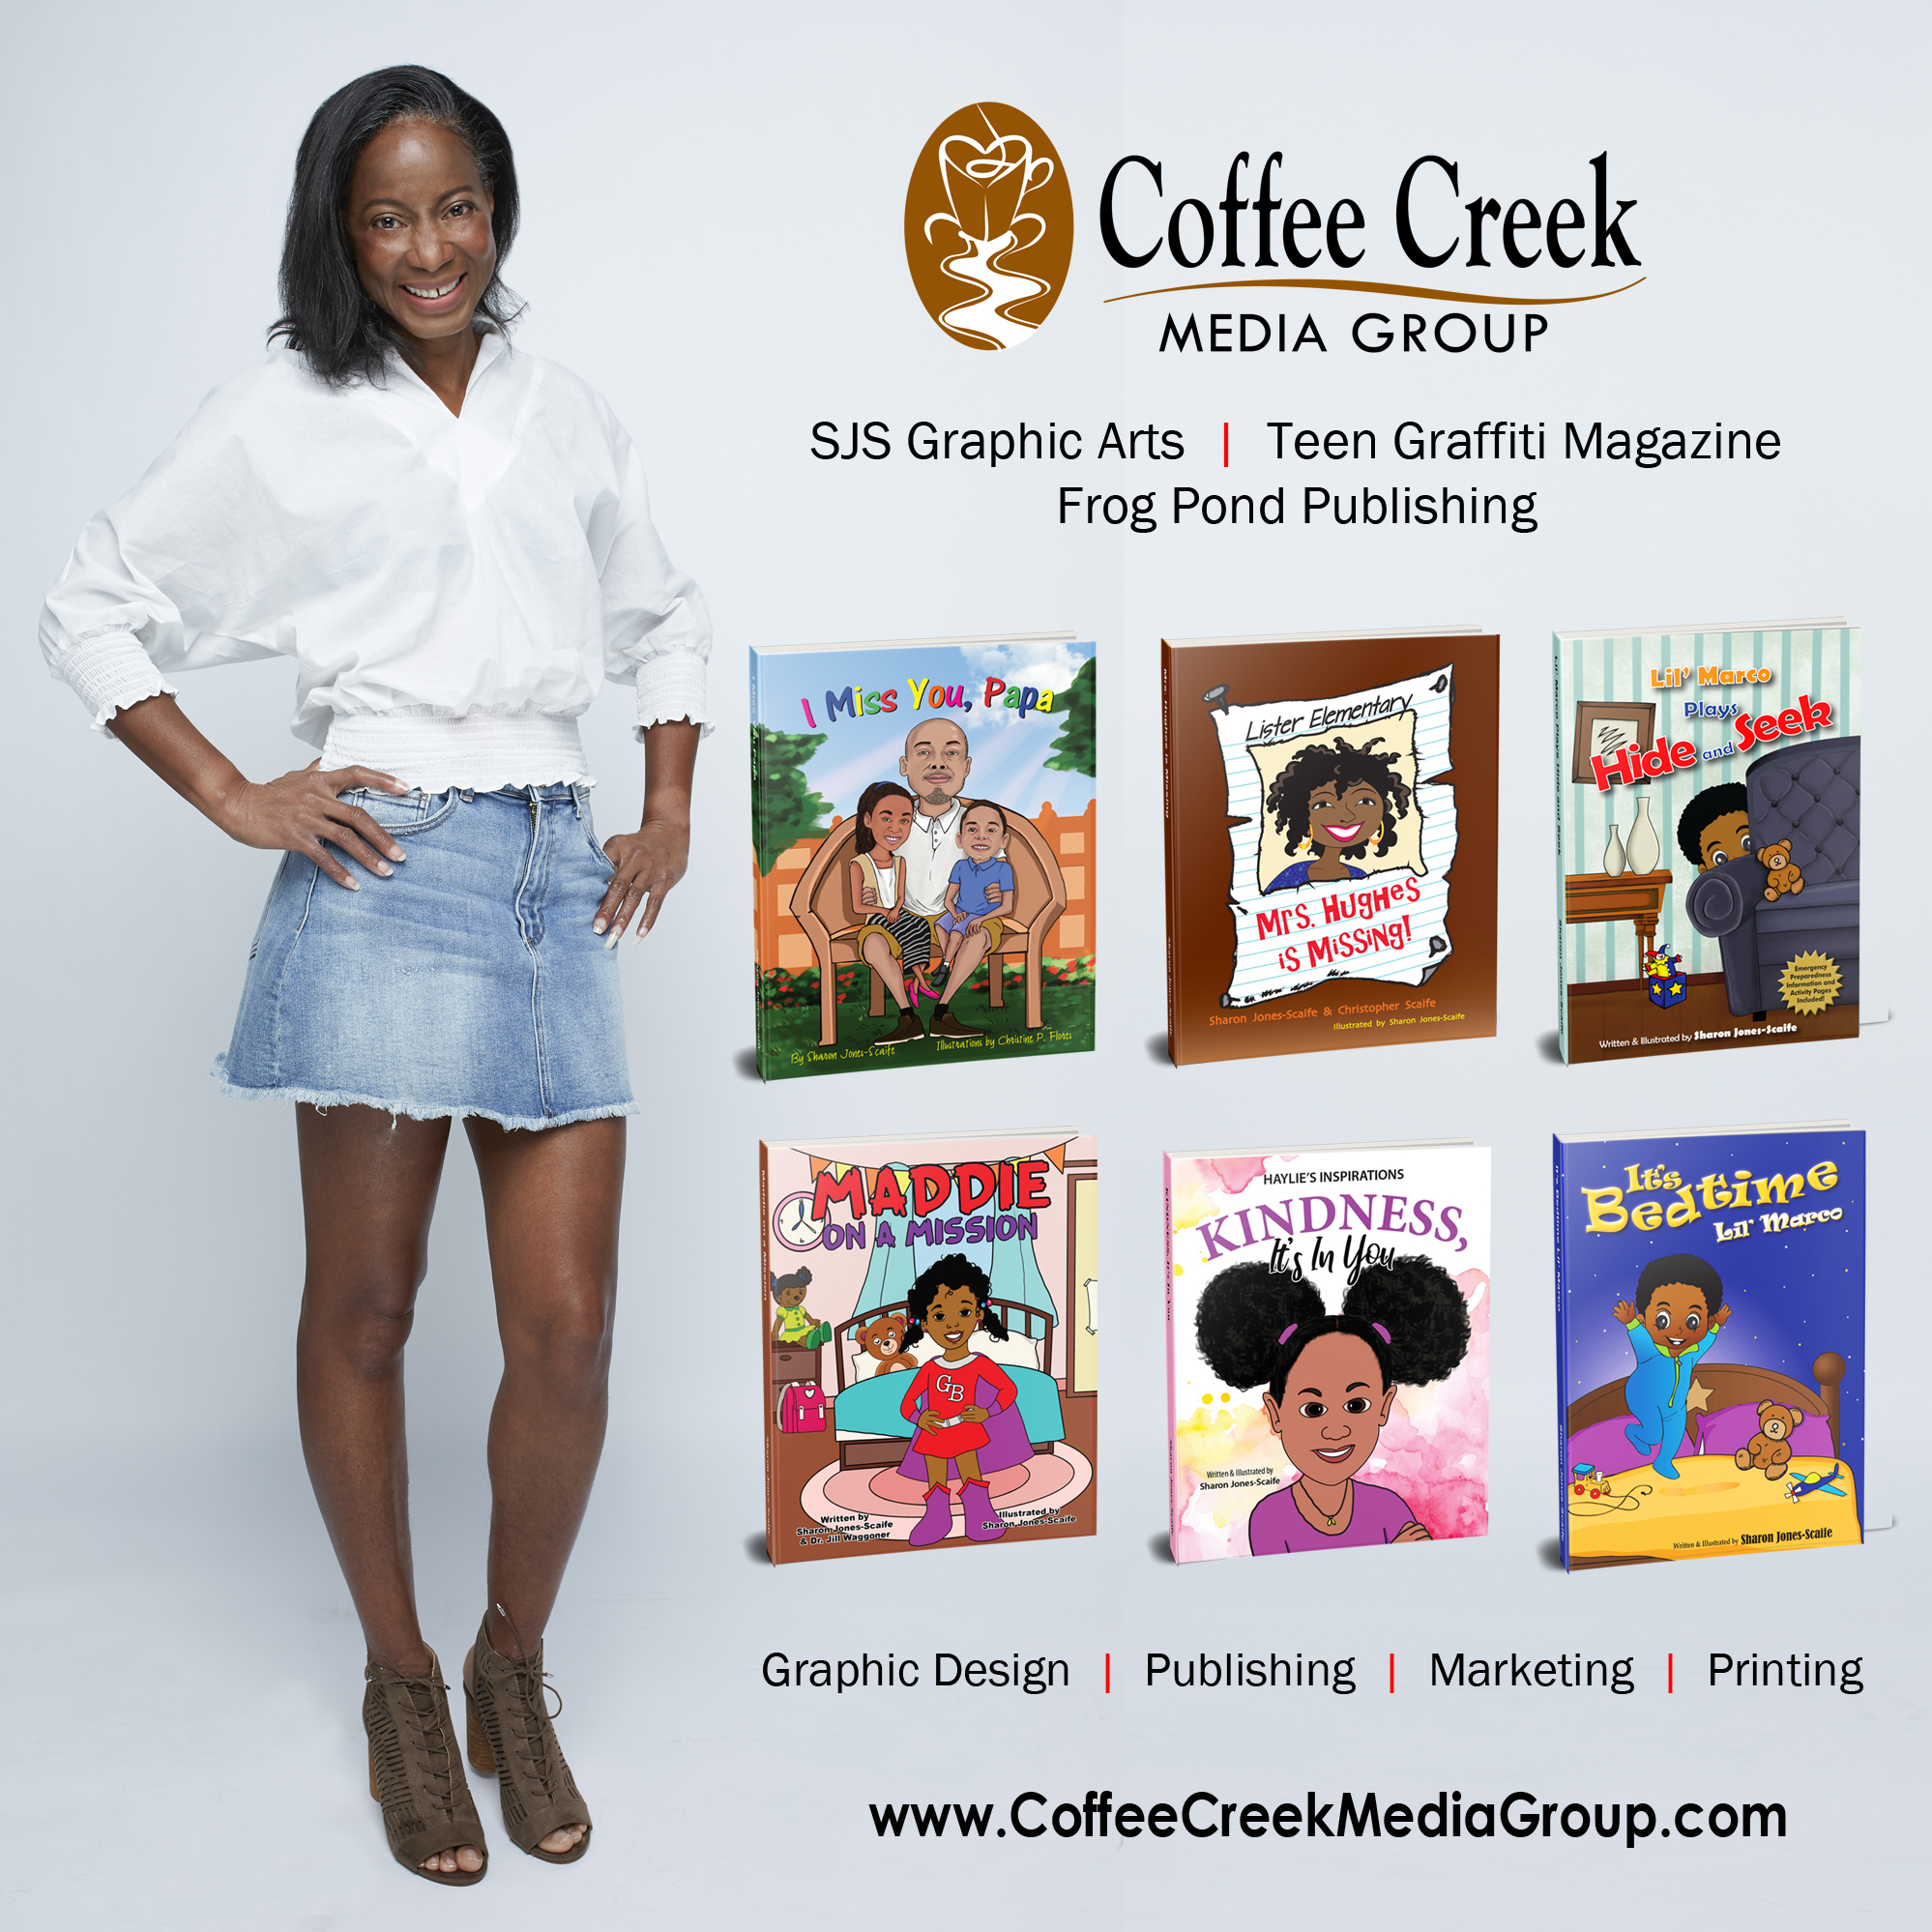 Coffee Creek Media Group